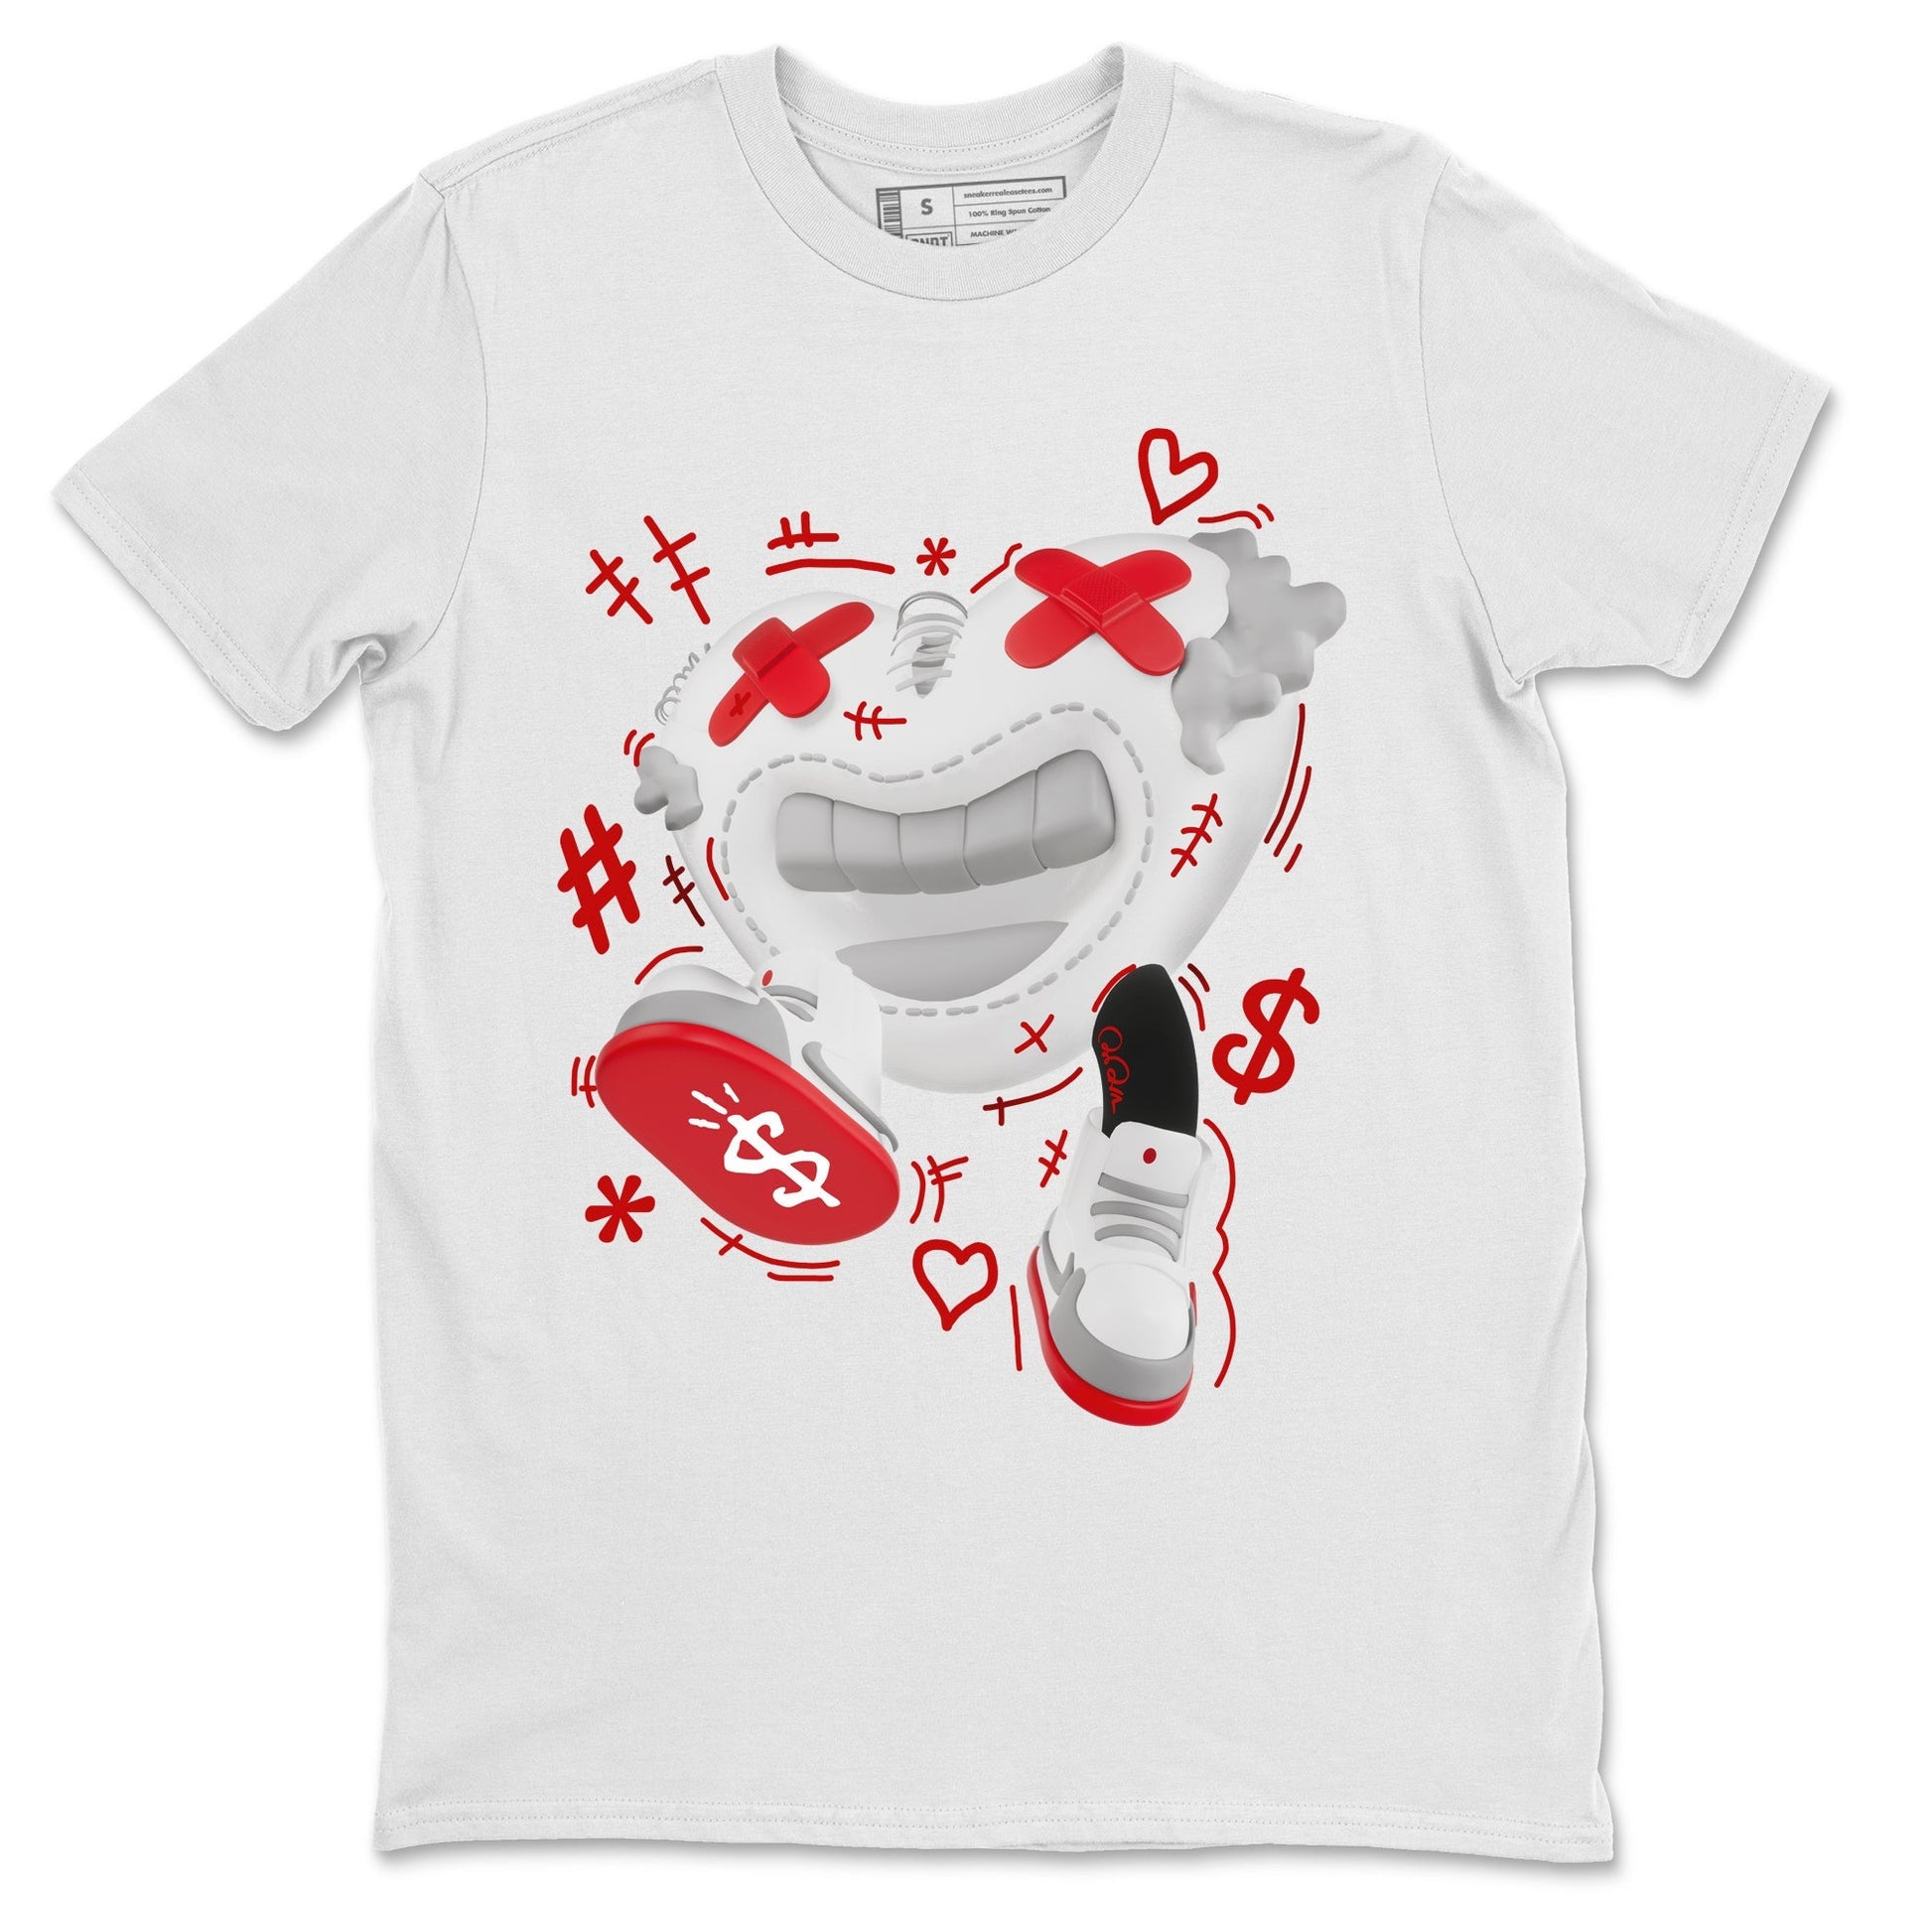 Air Jordan 13 Wolf Grey shirt to match jordans Walk In Love Streetwear Sneaker Shirt AJ13 Wolf Grey Drip Gear Zone Sneaker Matching Clothing Unisex White 2 T-Shirt